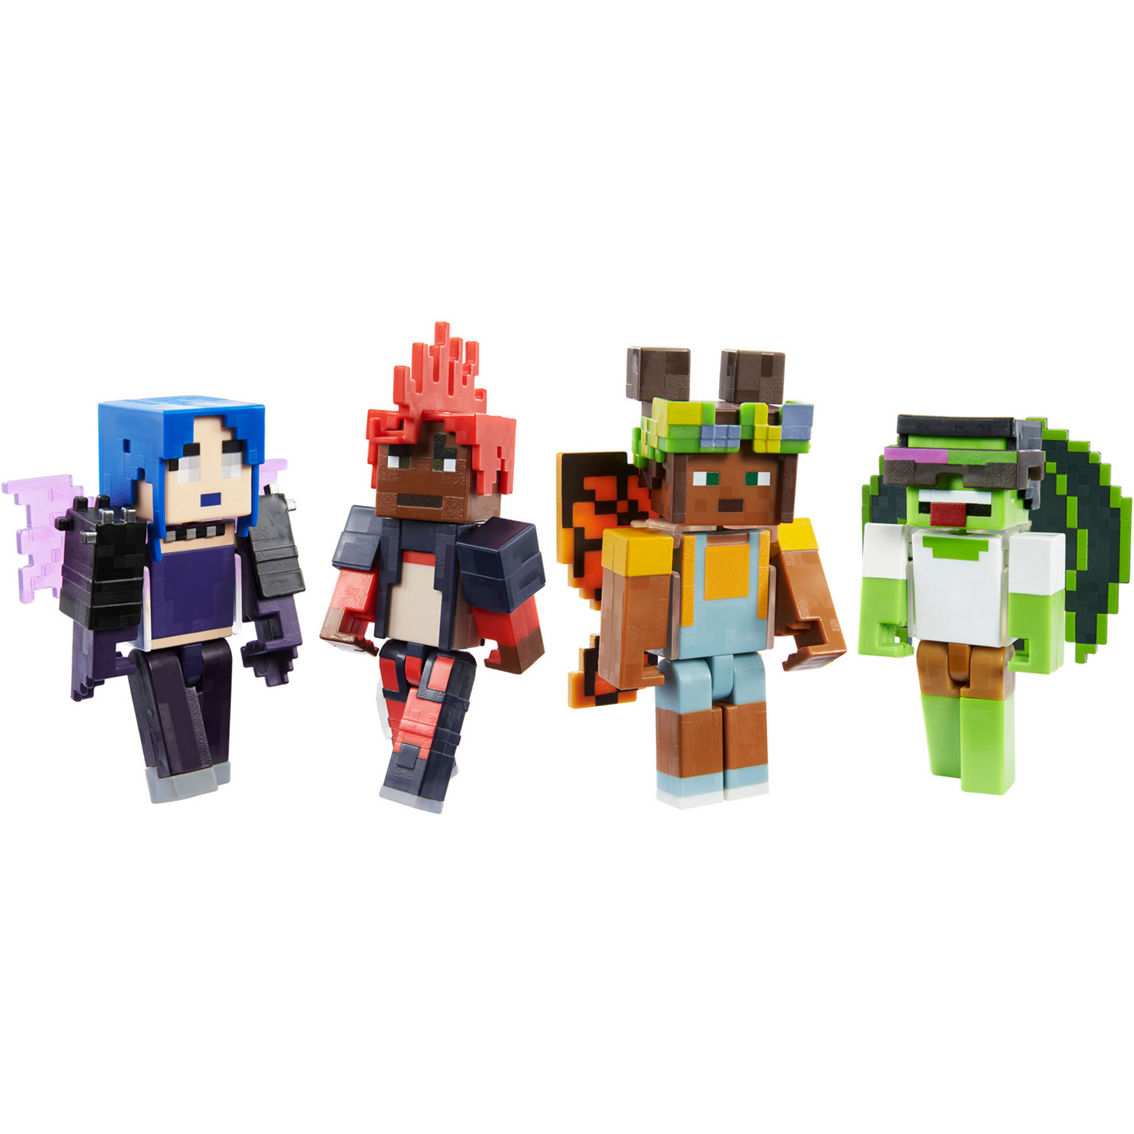 Mattel Minecraft Creator Series Figures - Image 2 of 5